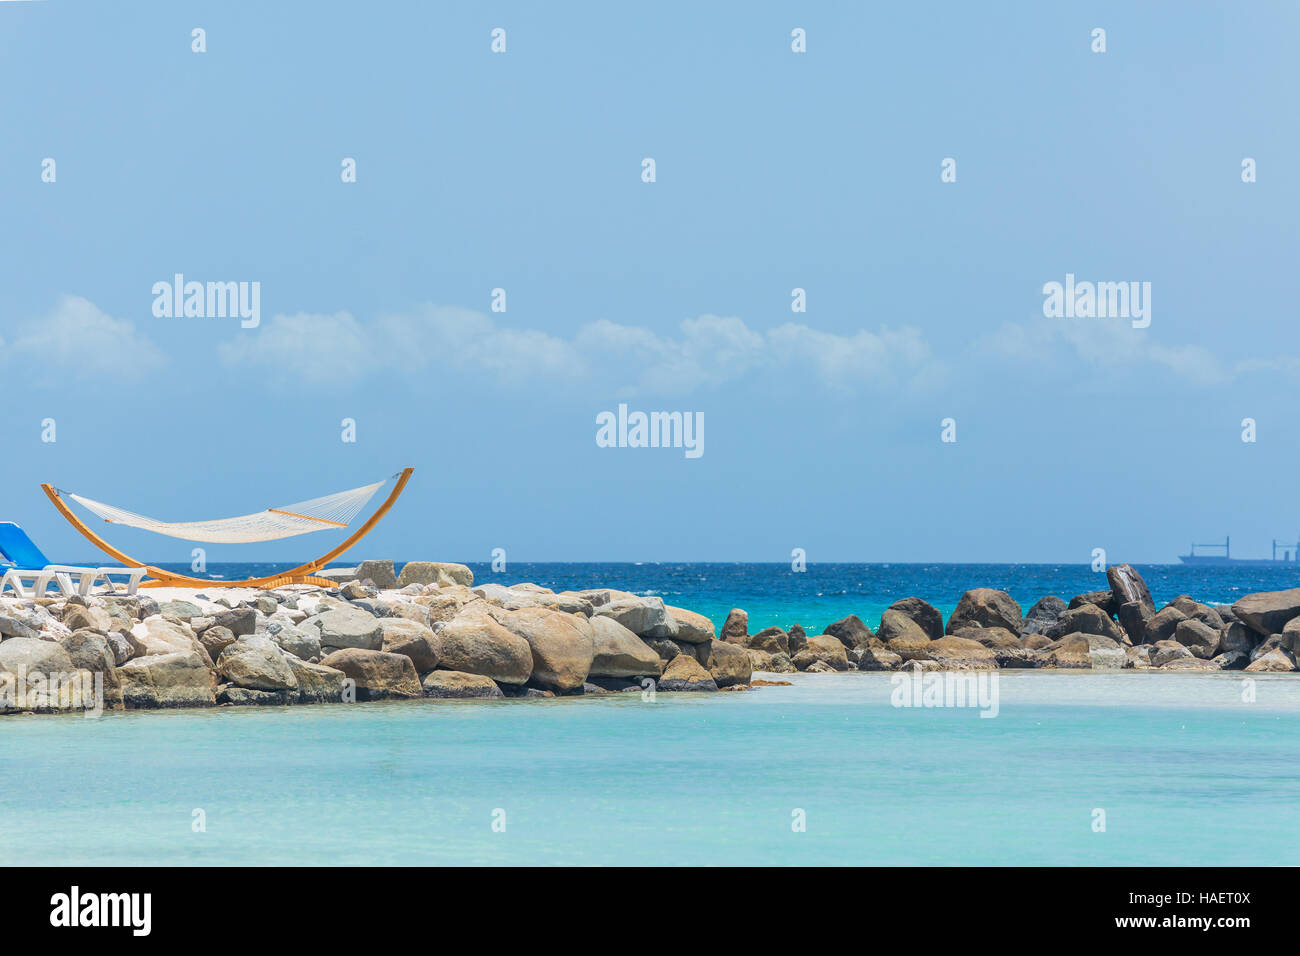 Flamingo beach at Aruba island Stock Photo